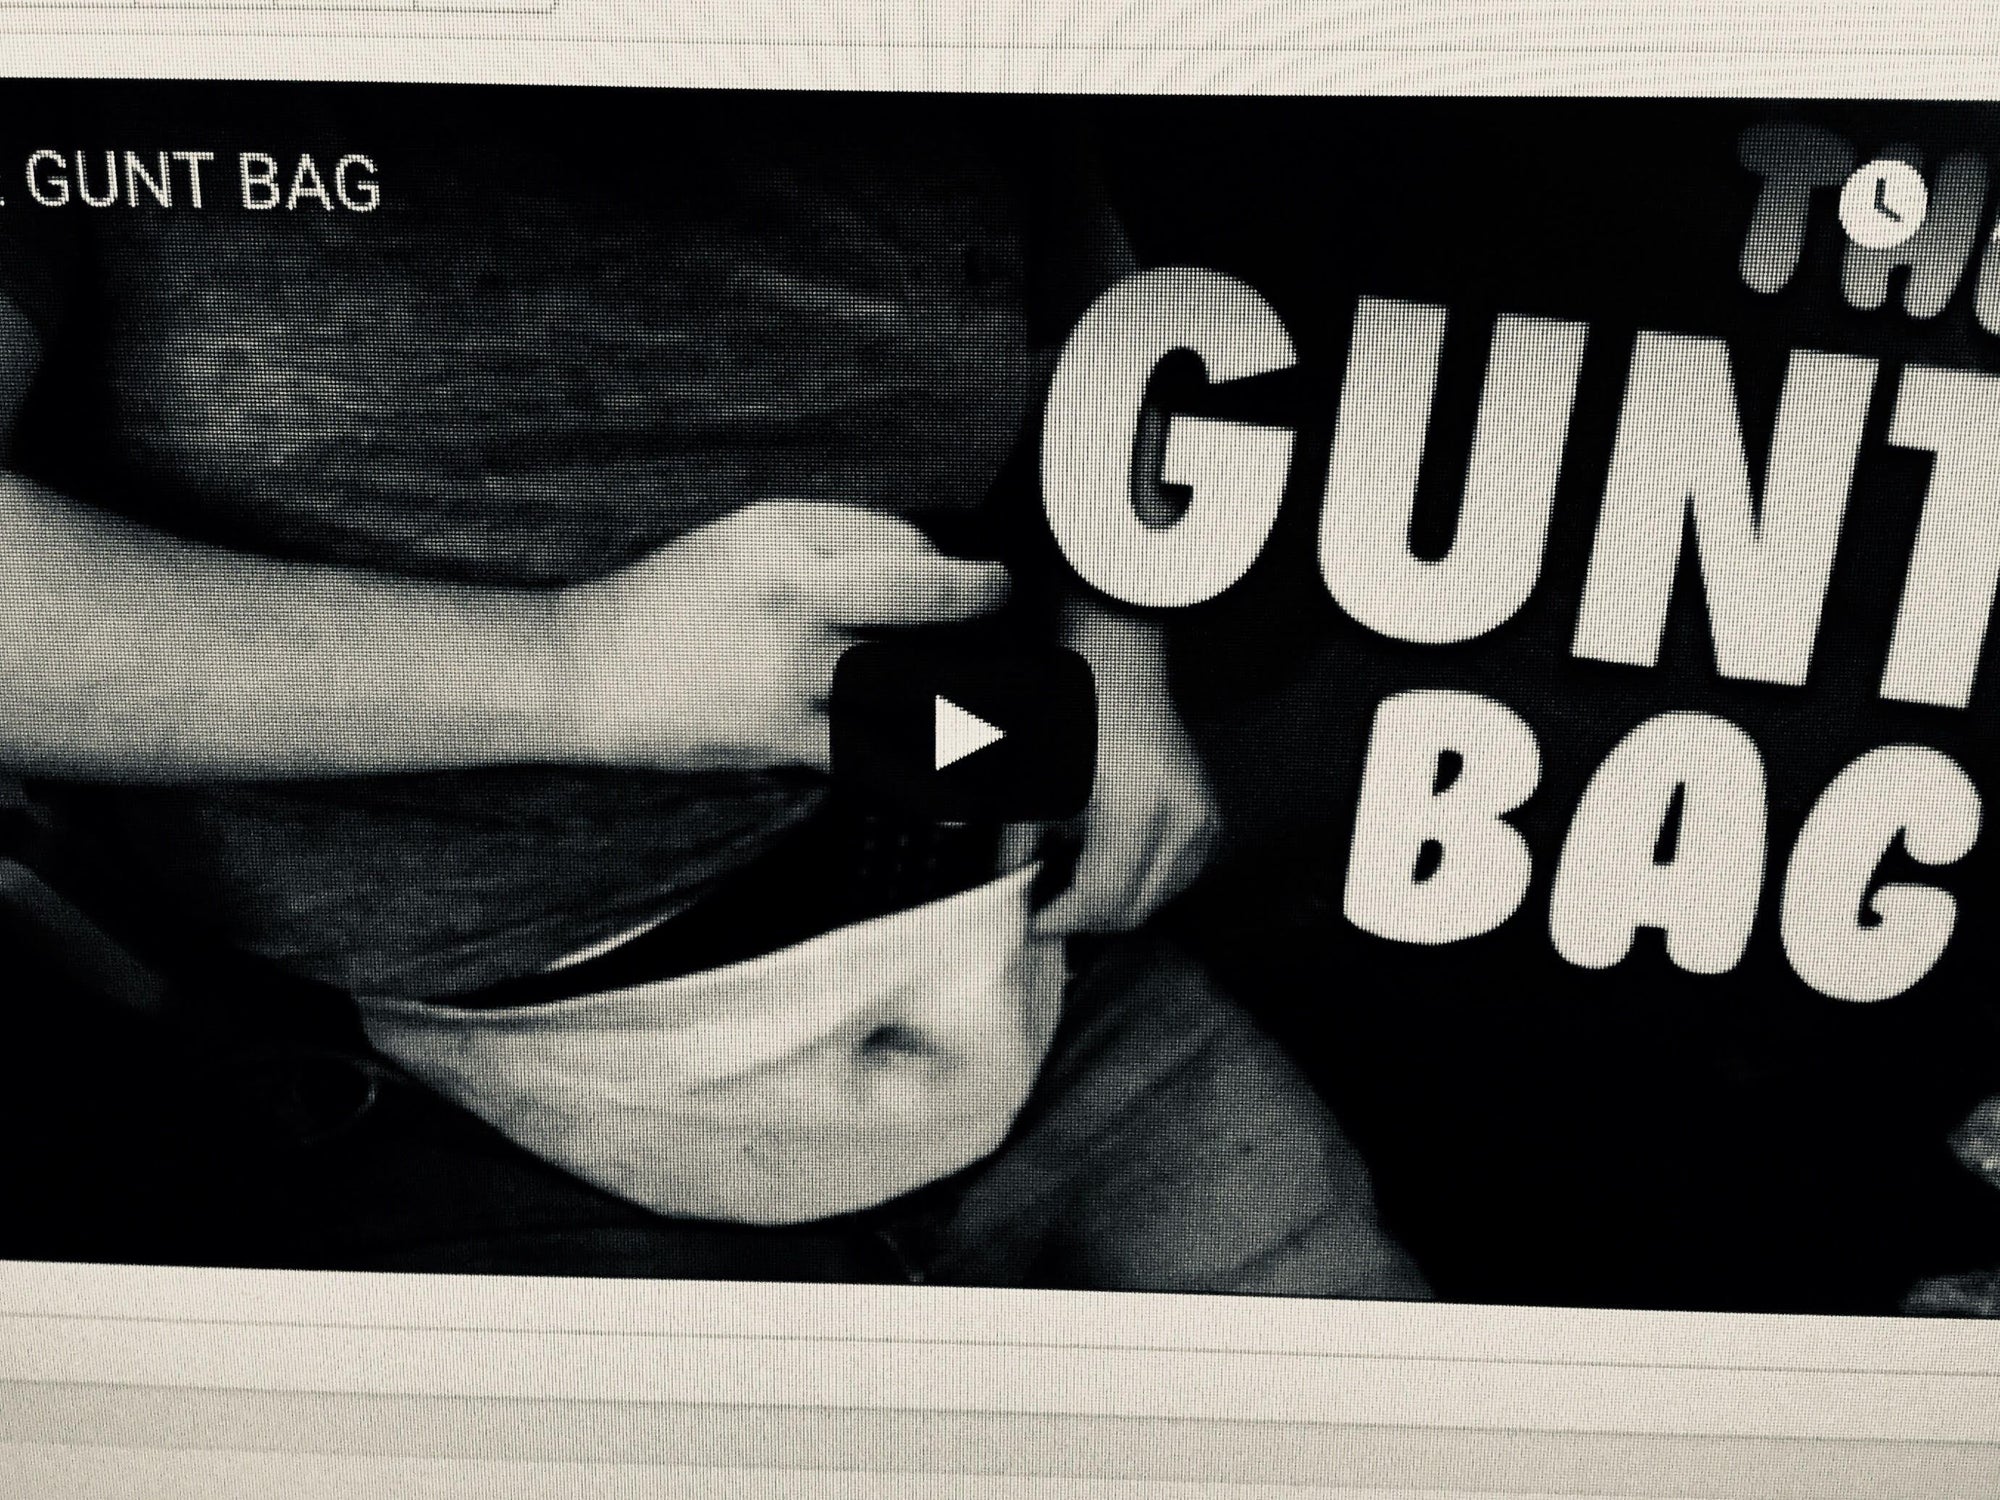 The Gunt or Genis Bag